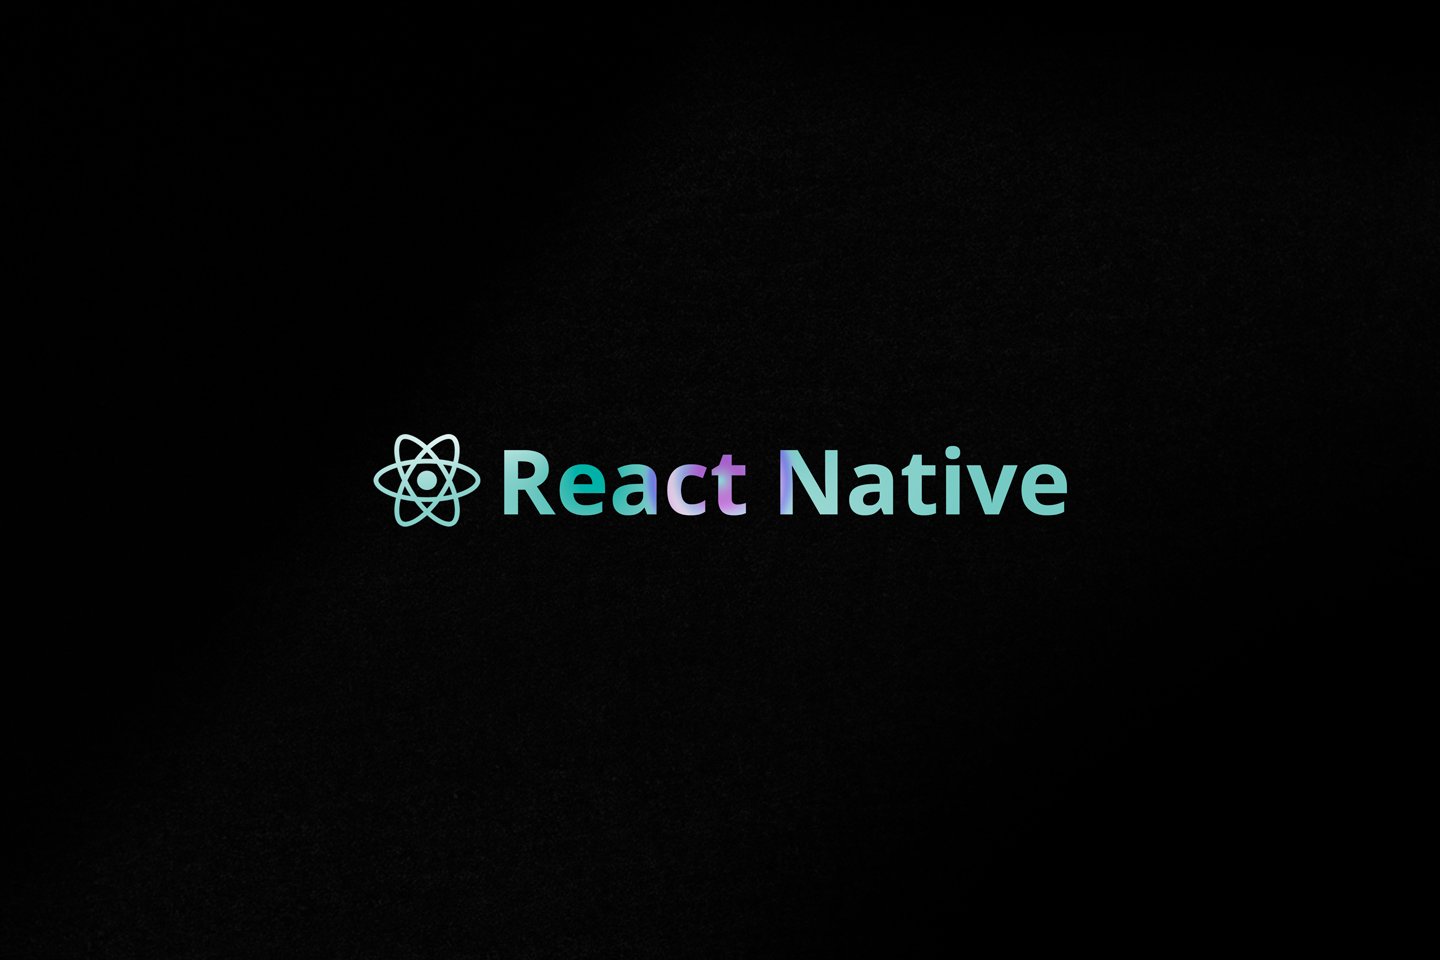 react-native-img